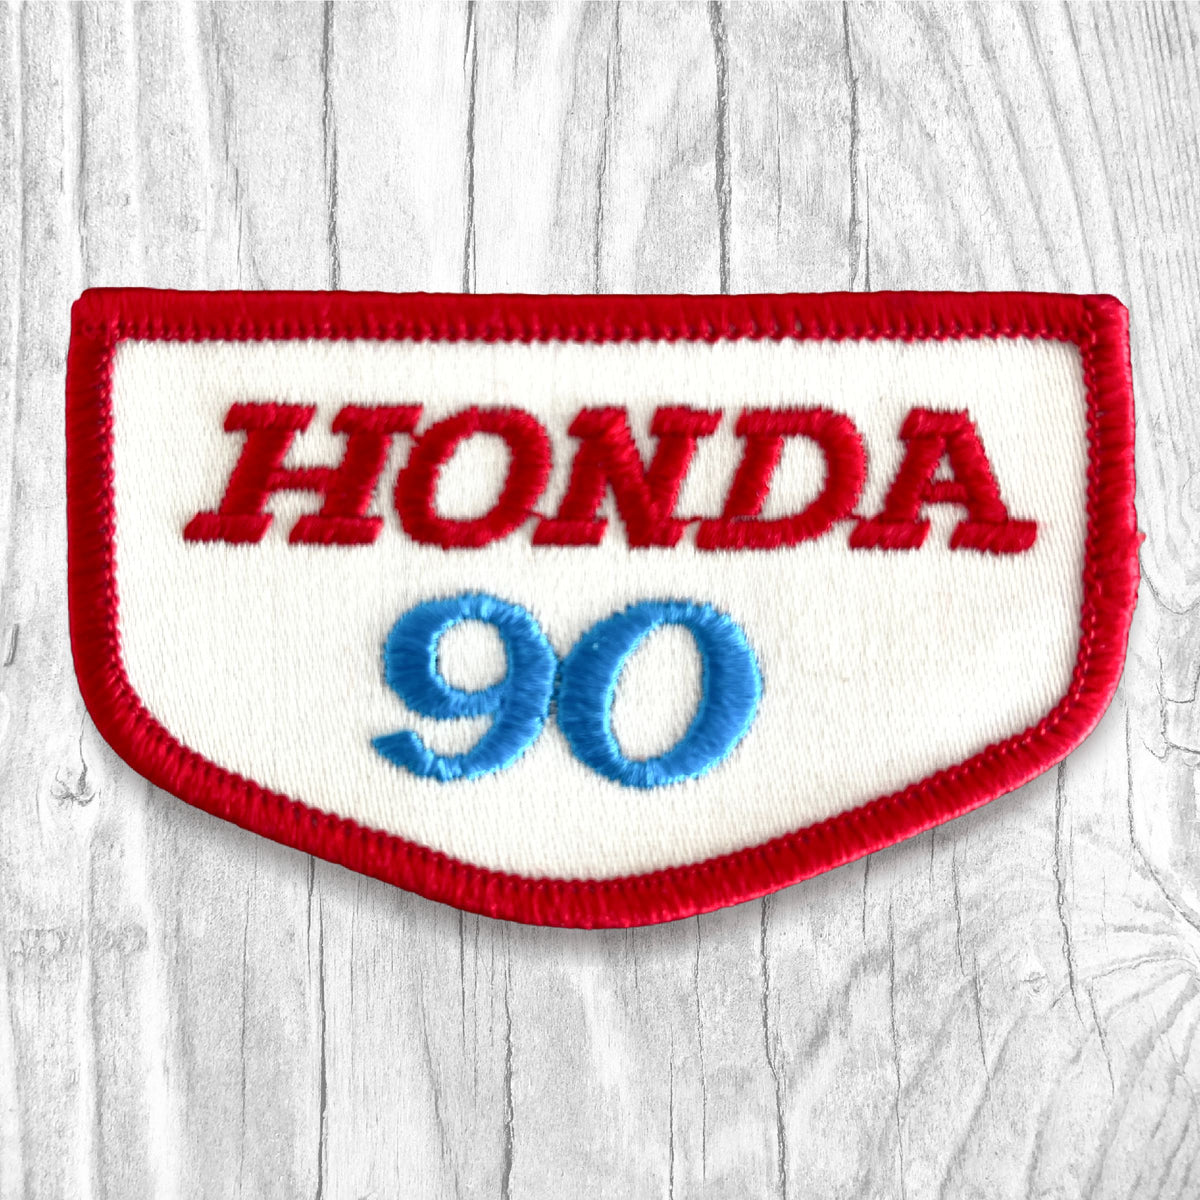 vintage honda logo